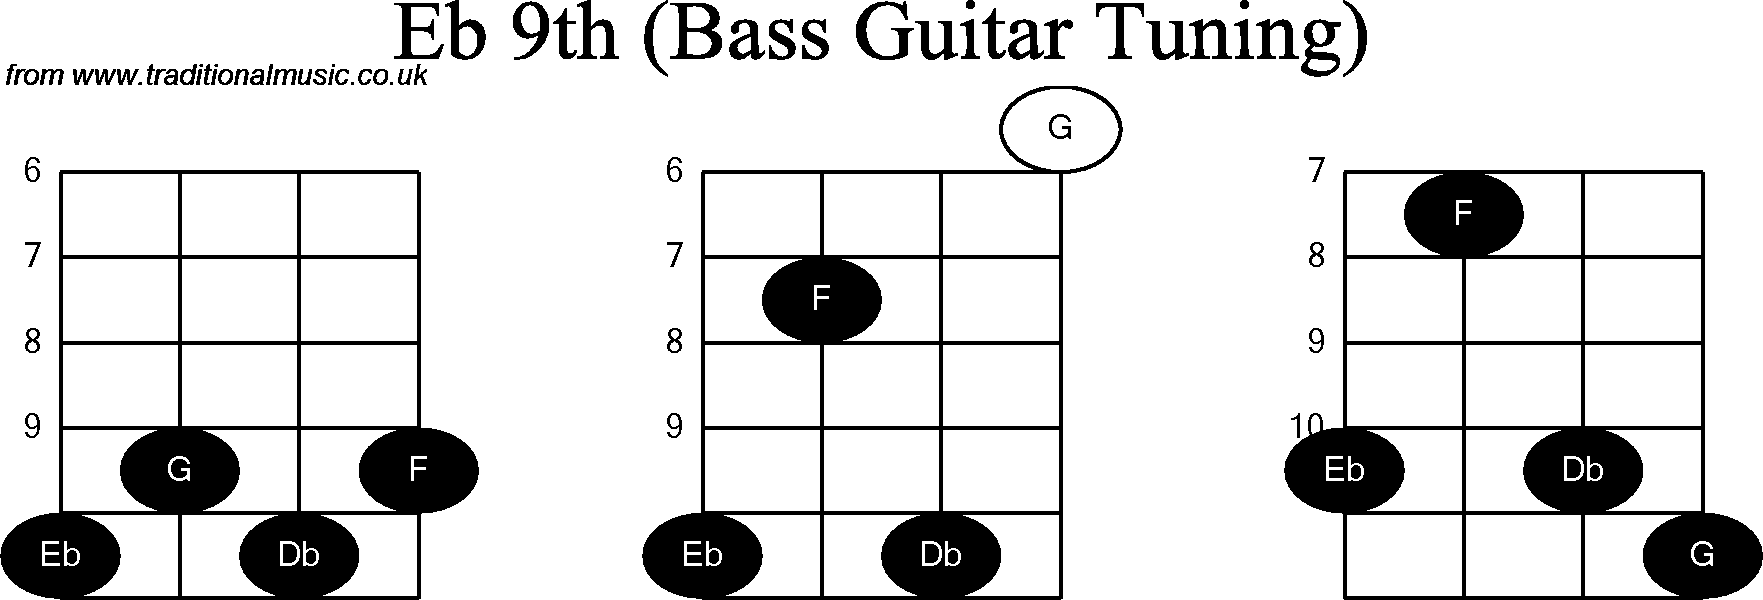 Bass Guitar chord charts for: Eb9th